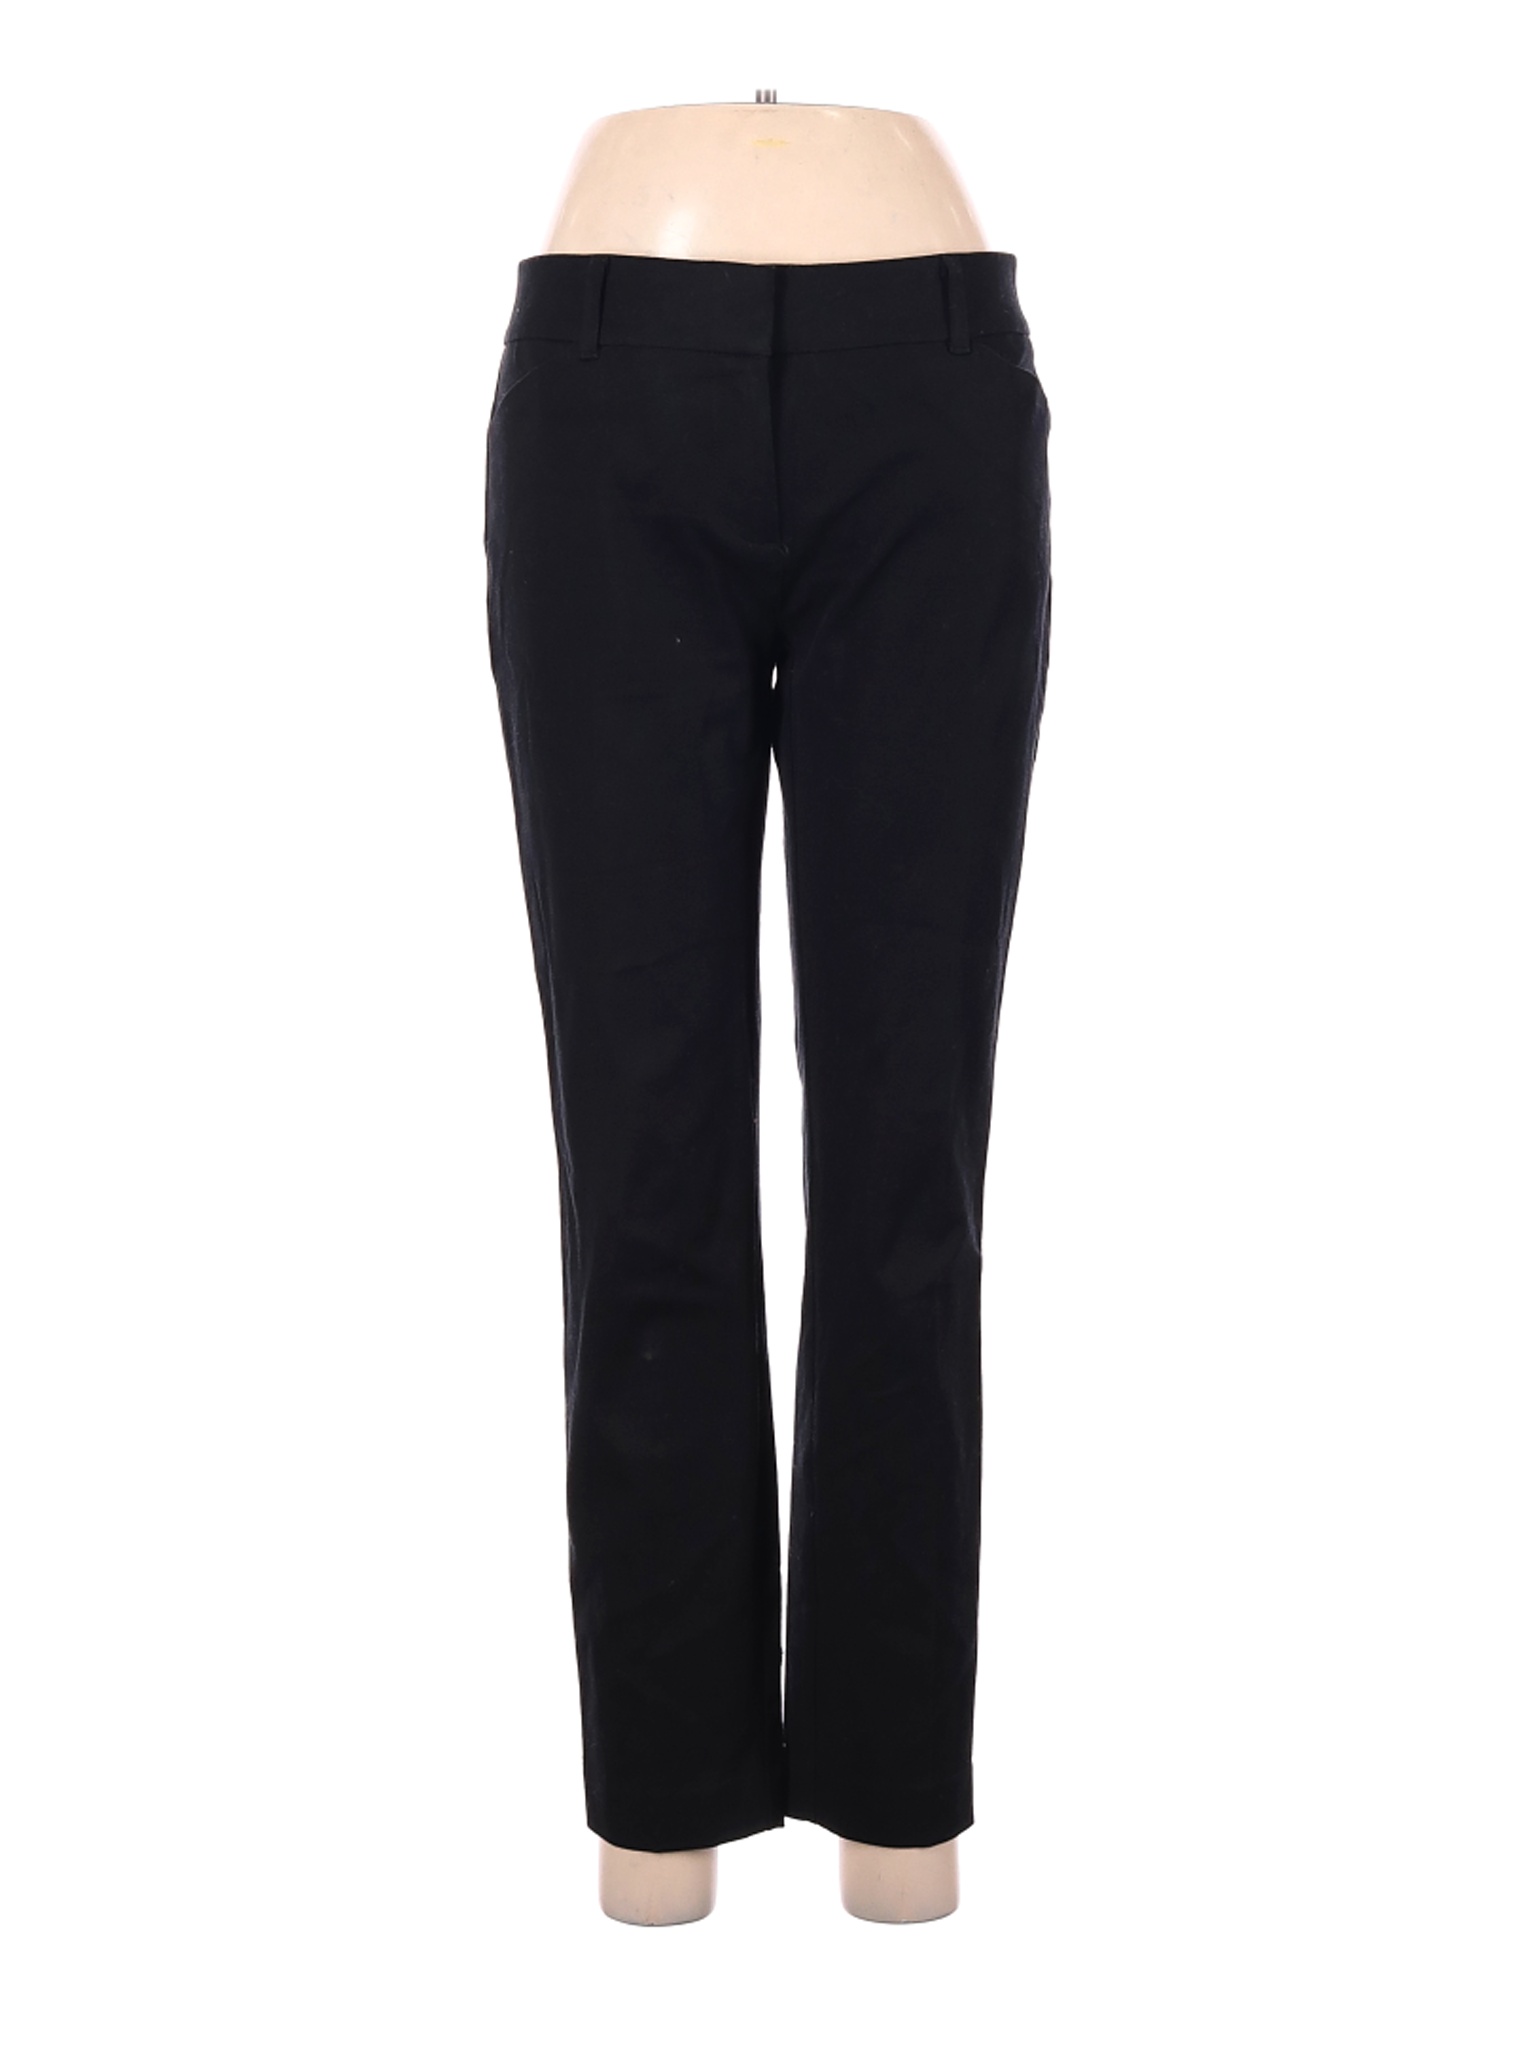 New York & Company Women Black Casual Pants 6 | eBay